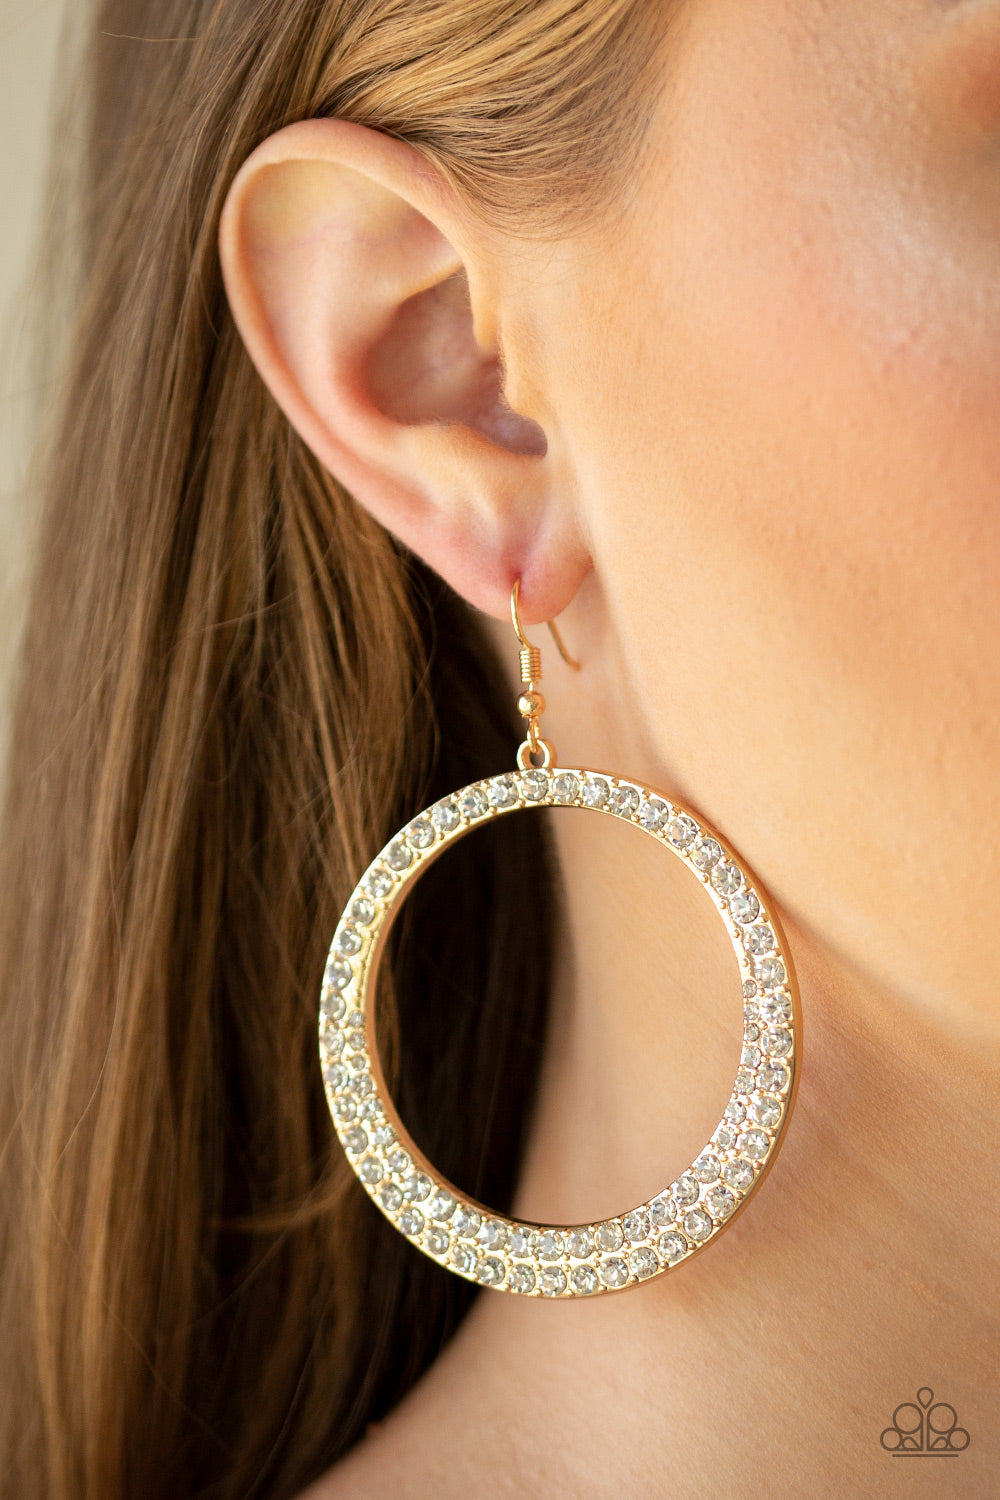 So Demanding - Gold Earrings - Paparazzi Accessories 